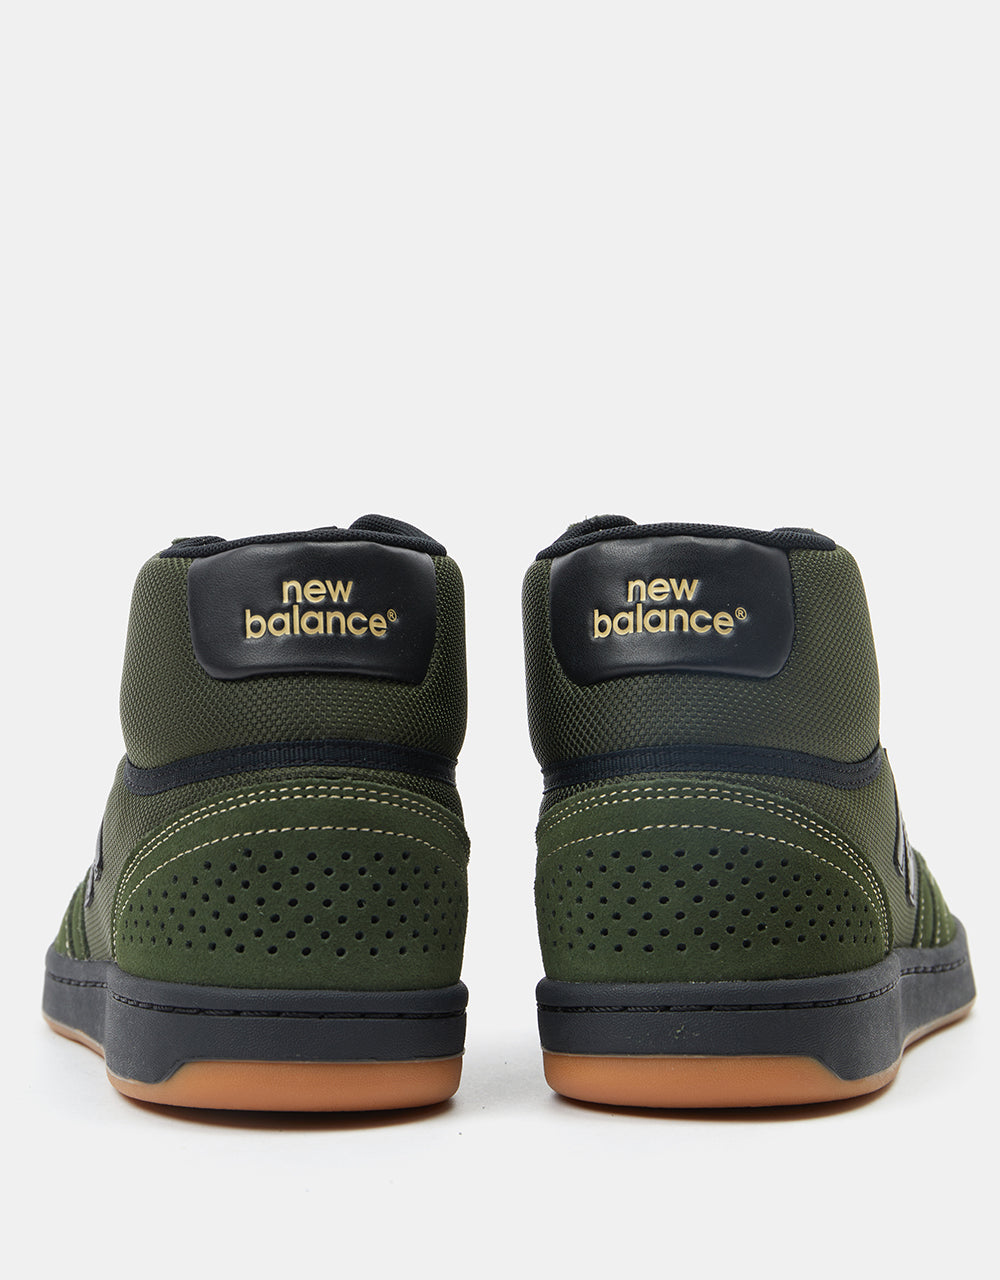 New Balance Numeric 440 Hi Skate Shoes - Olive/Black